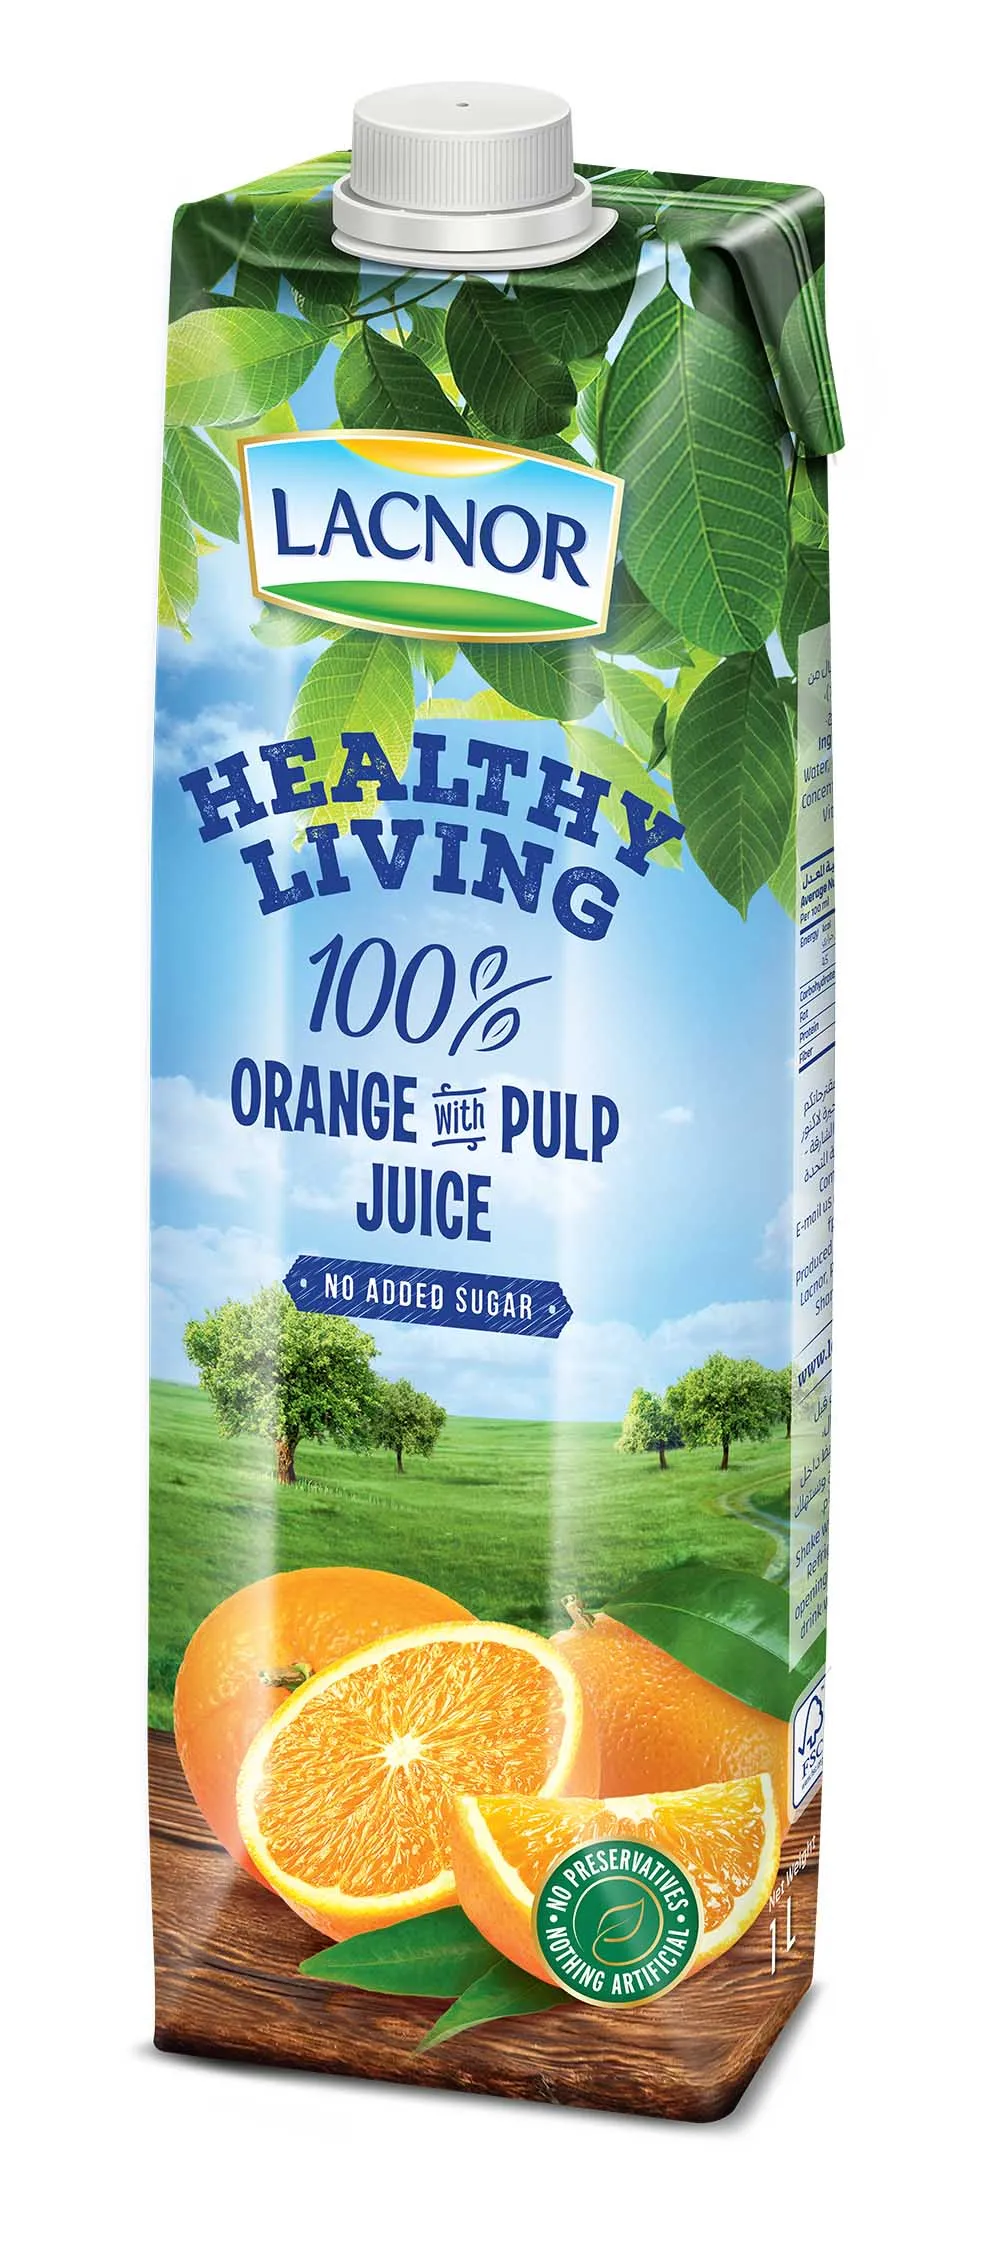 Lacnor Health Living Orange Juice - 1 Litre, pack of 6